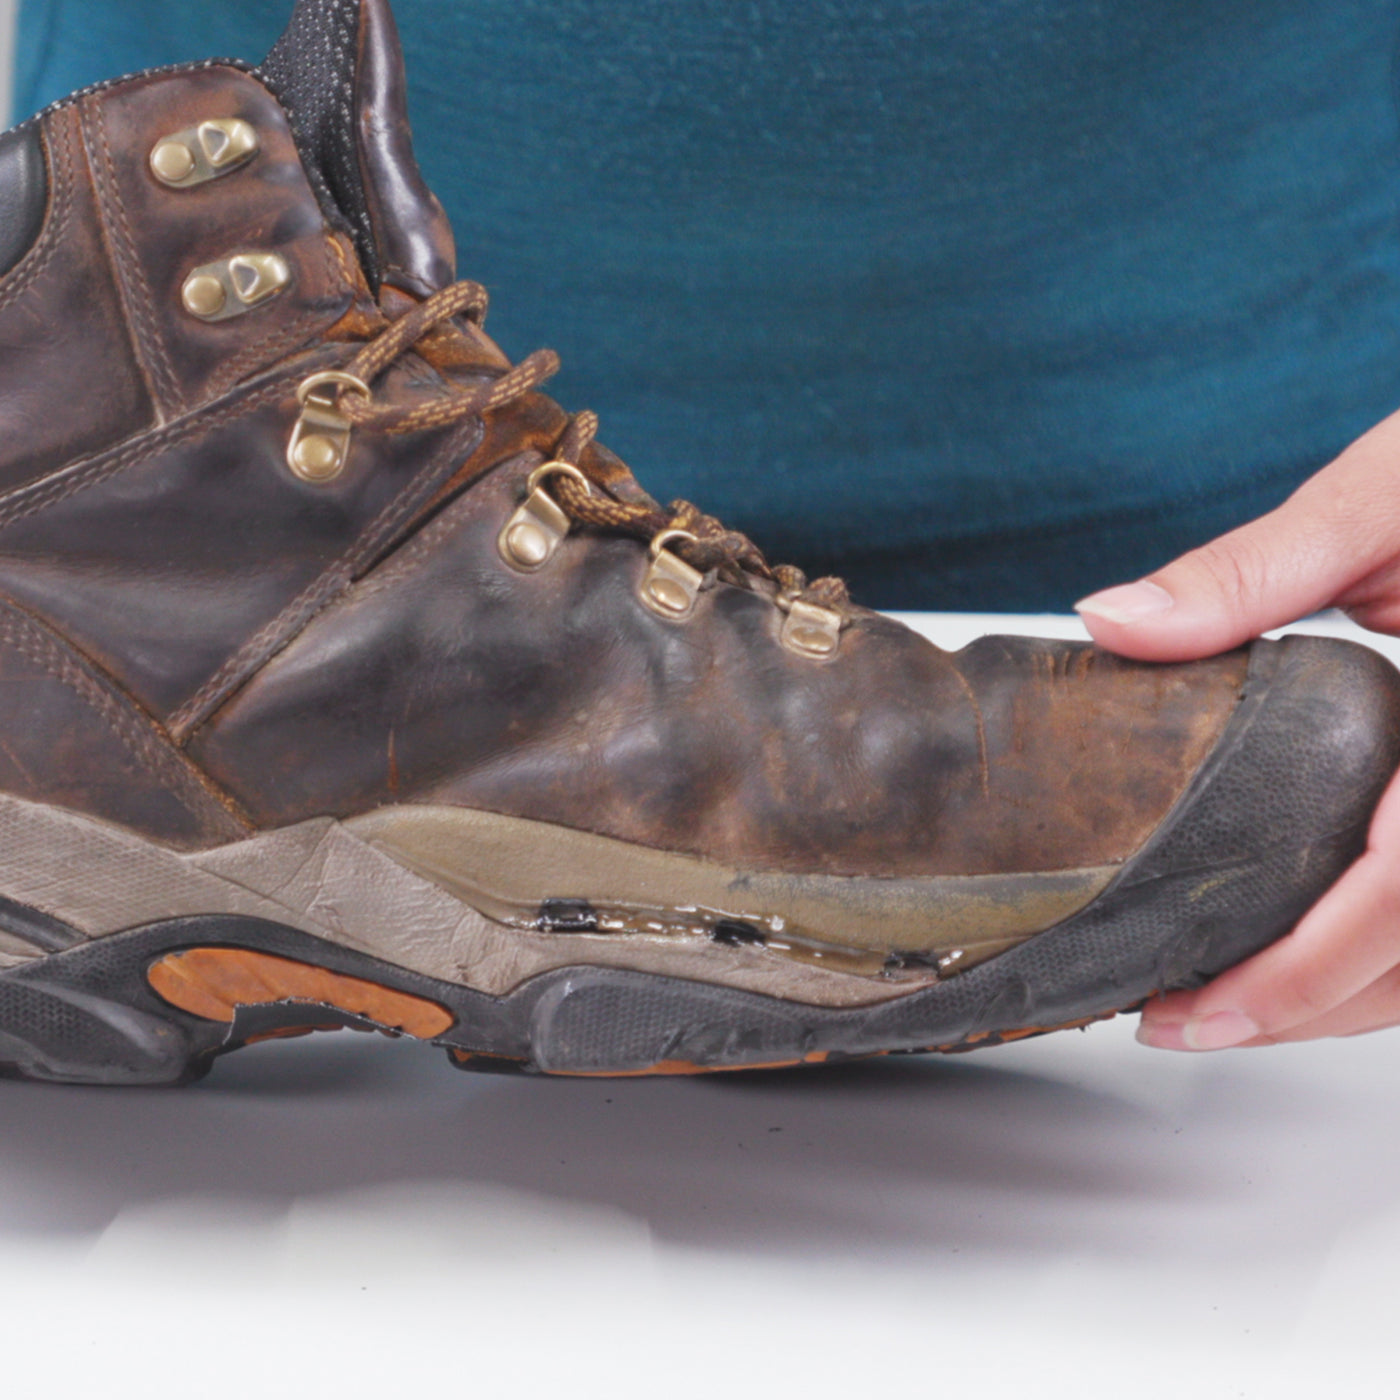 Gear Aid - Aquaseal + SR Shoe Repair